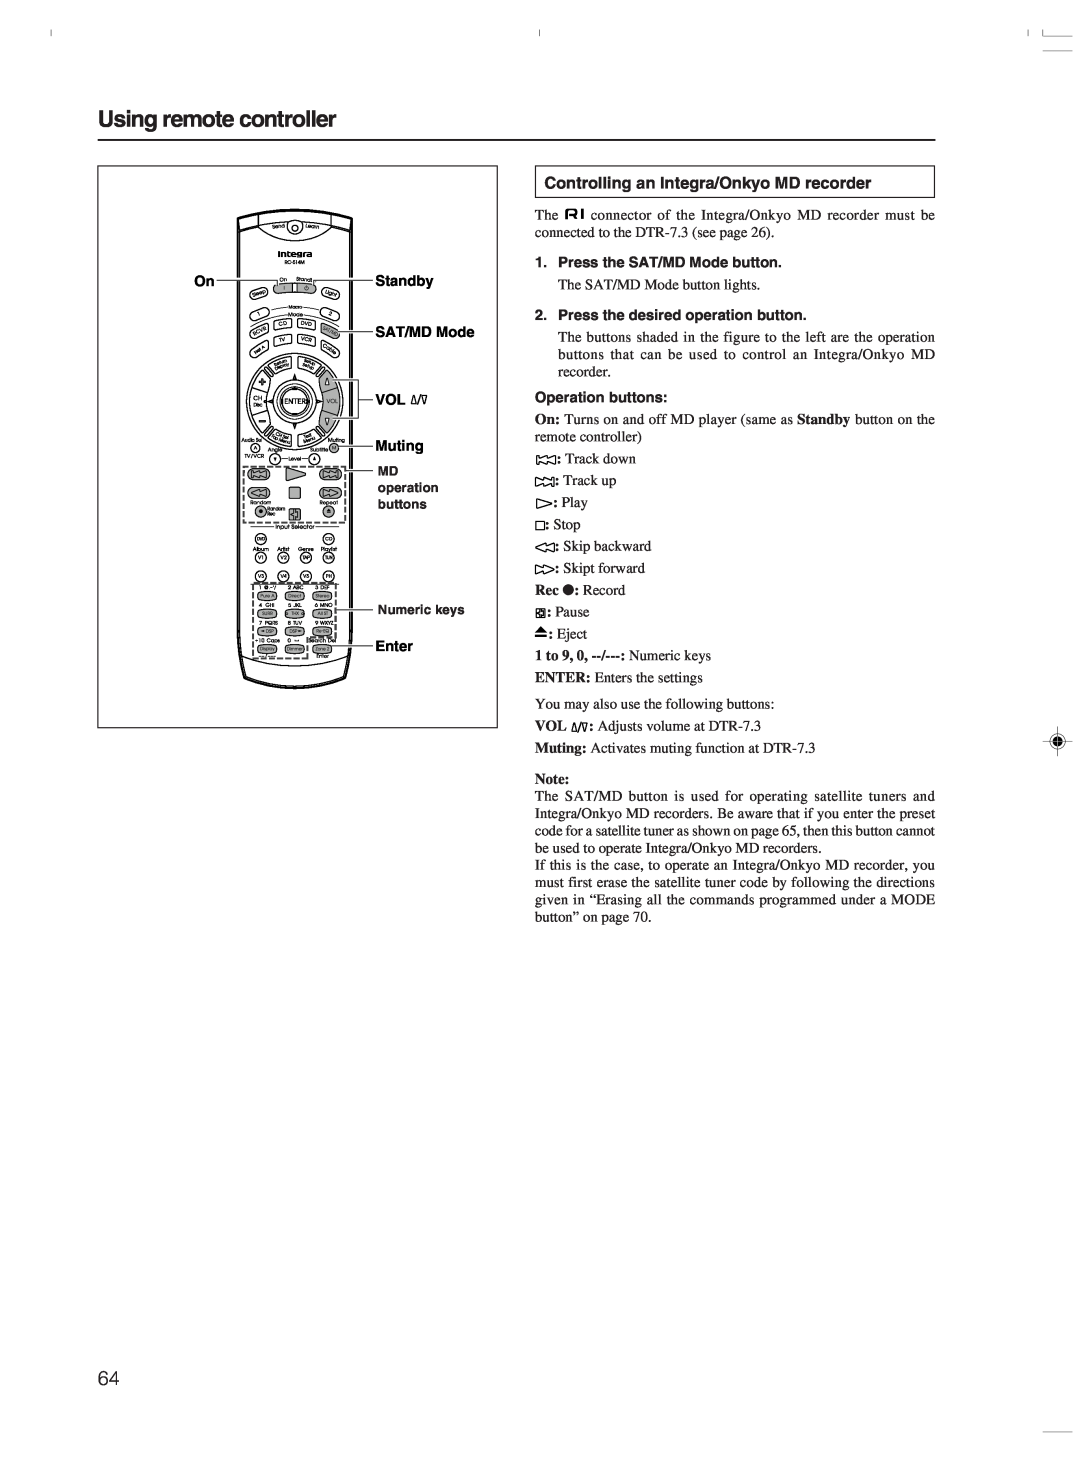 Integra DTR-7.3 instruction manual Controlling an Integra/Onkyo MD recorder, Using remote controller, Rec : Record 